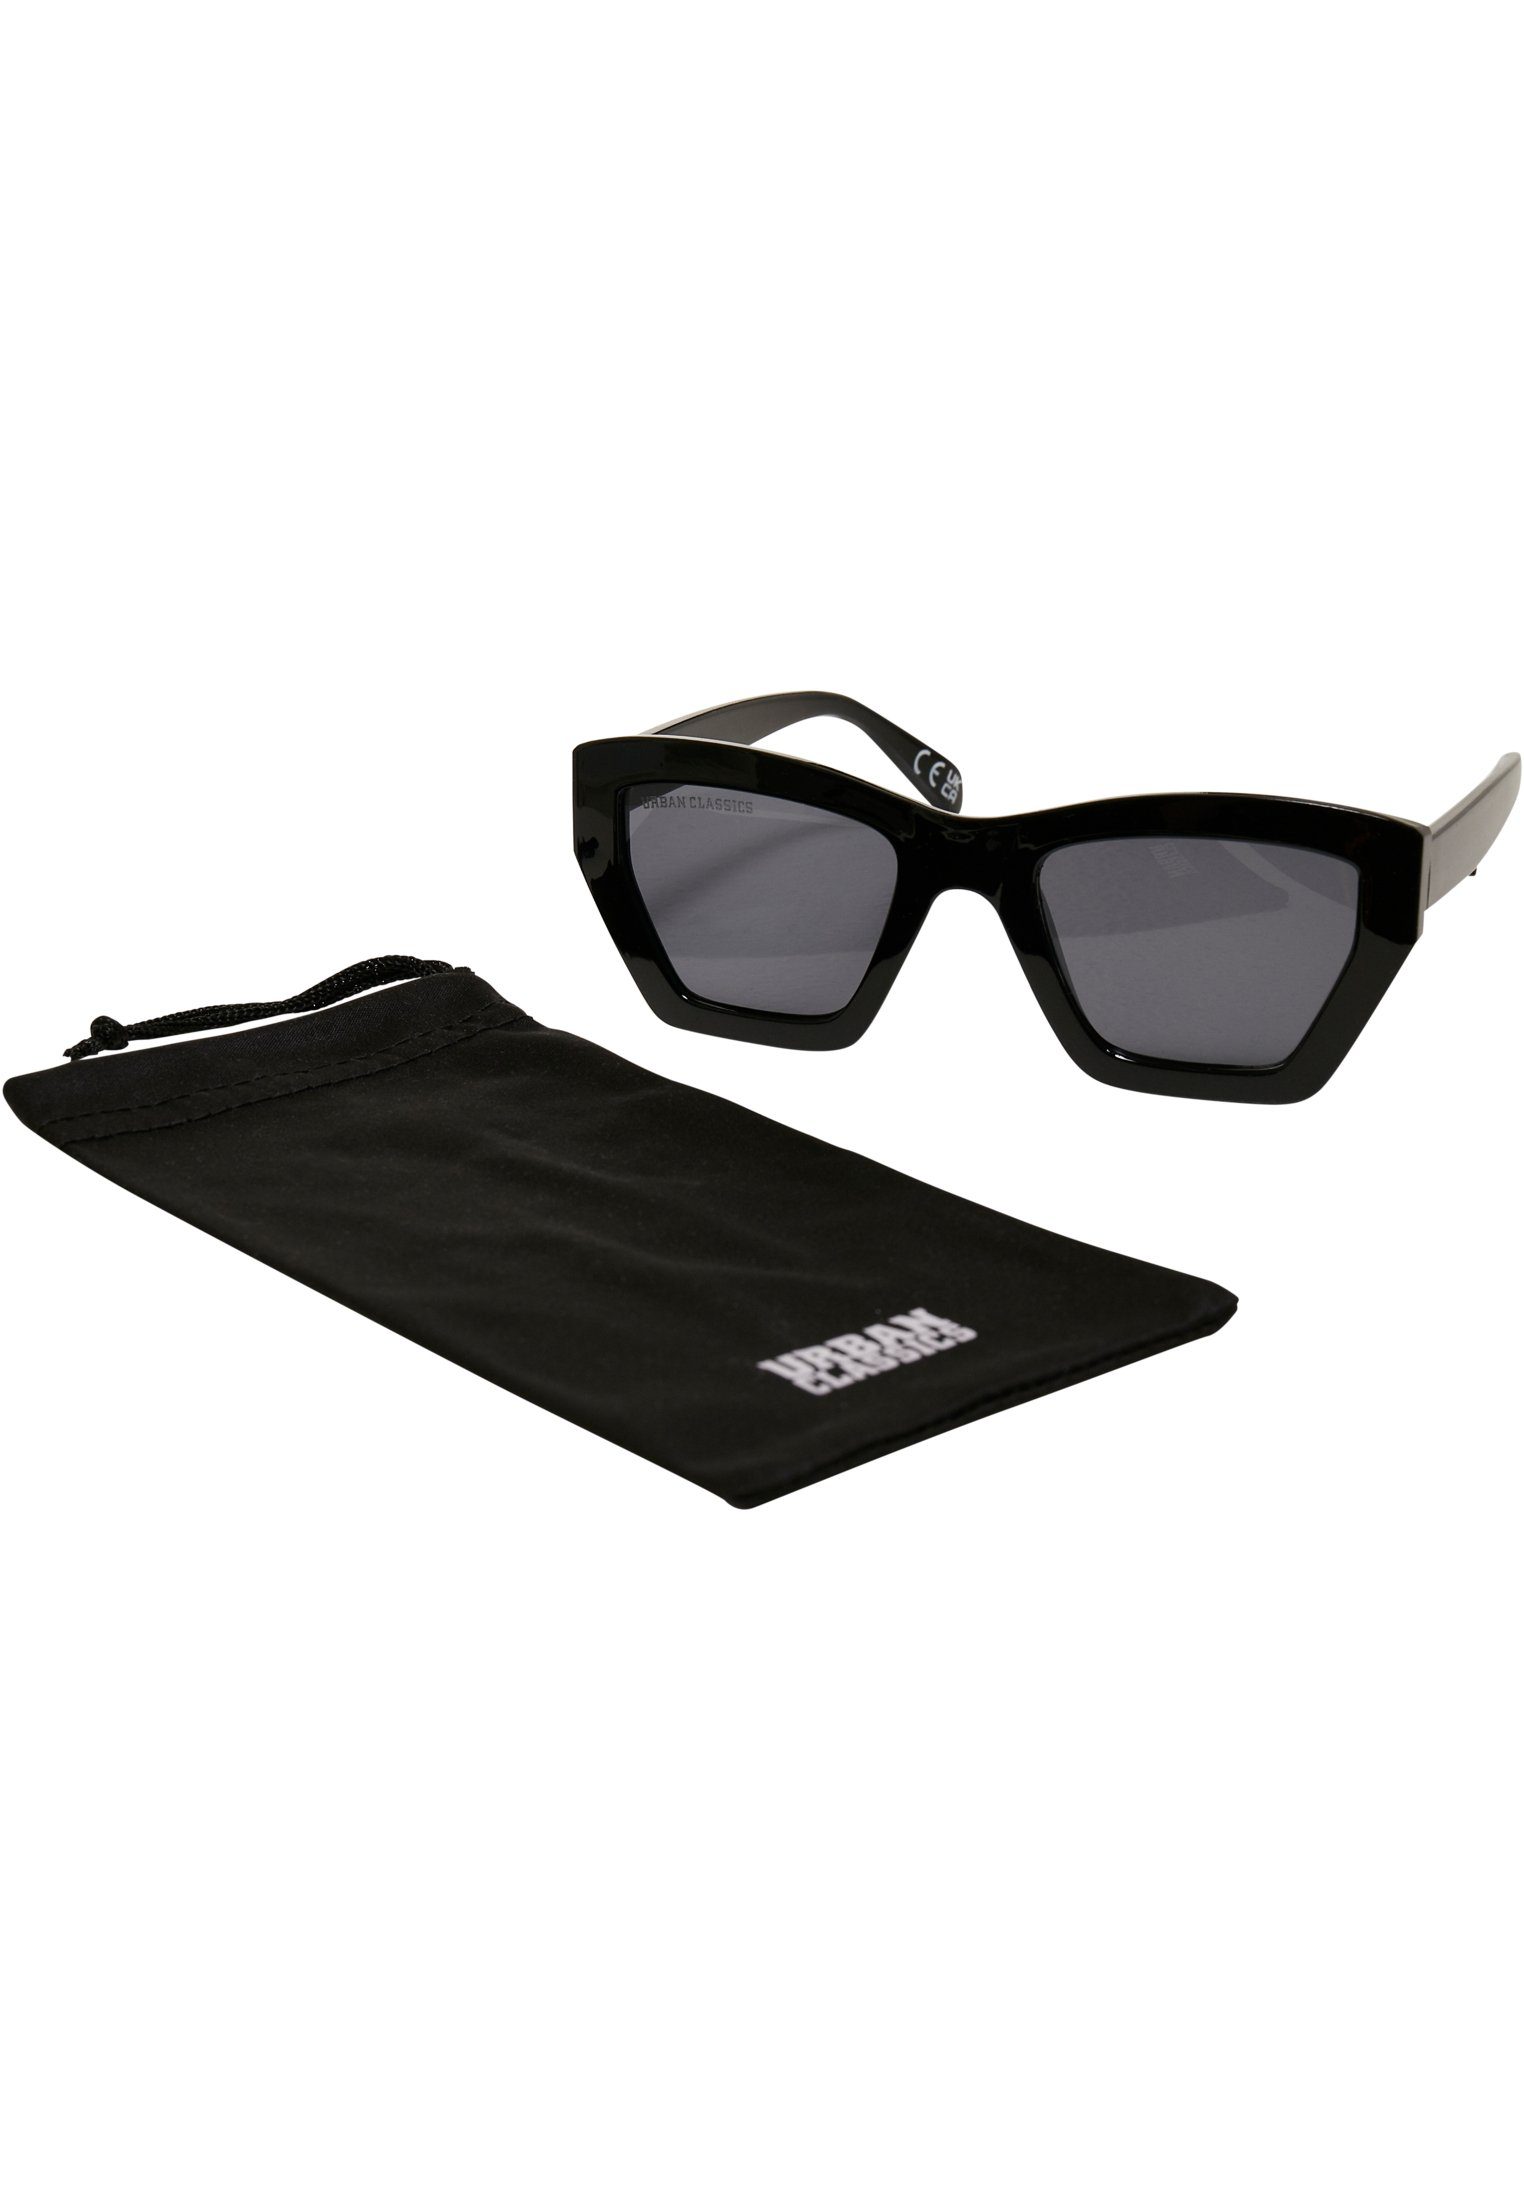 URBAN CLASSICS Sonnenbrille Unisex Sunglasses Rio Grande black